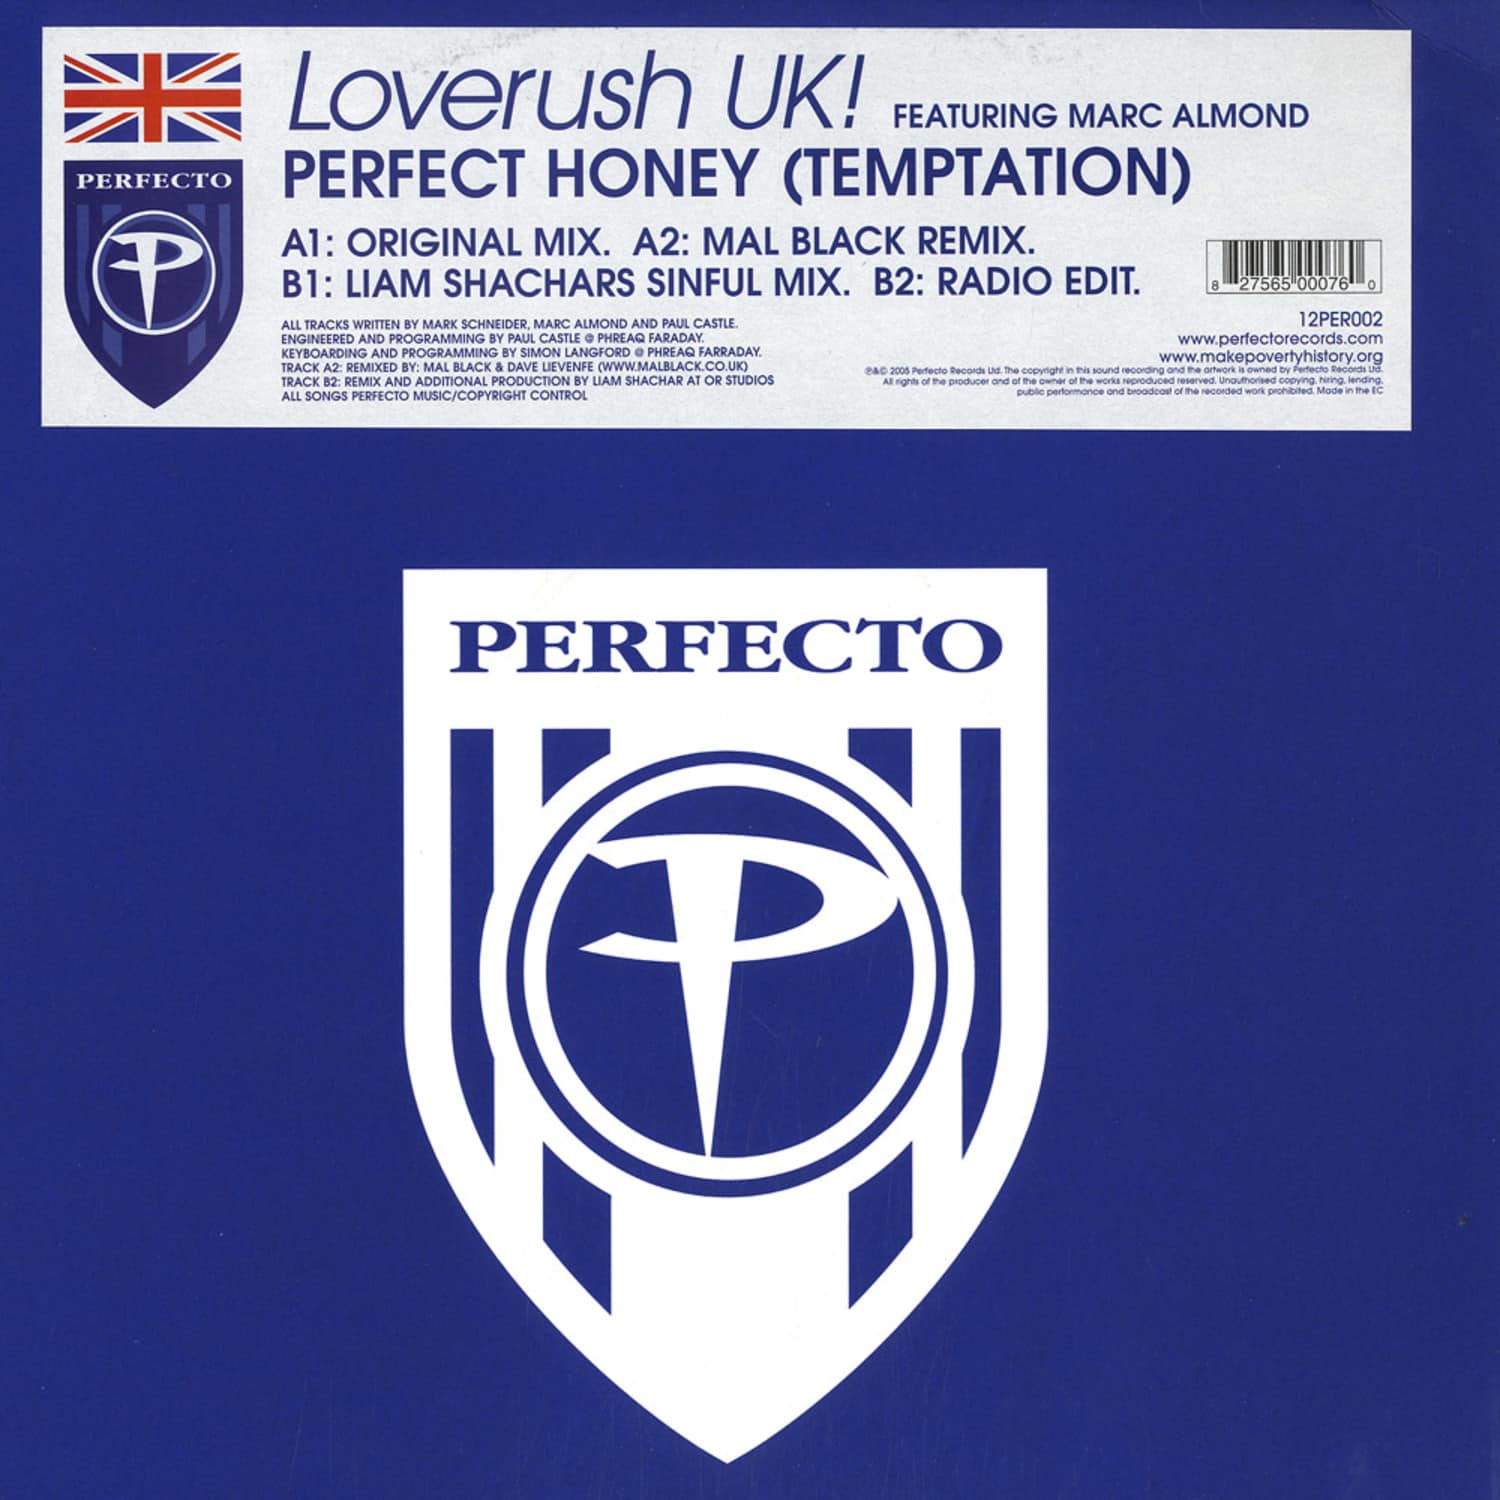 Loverush Uk! feat. Marc Almond - PERFECT HONEY 